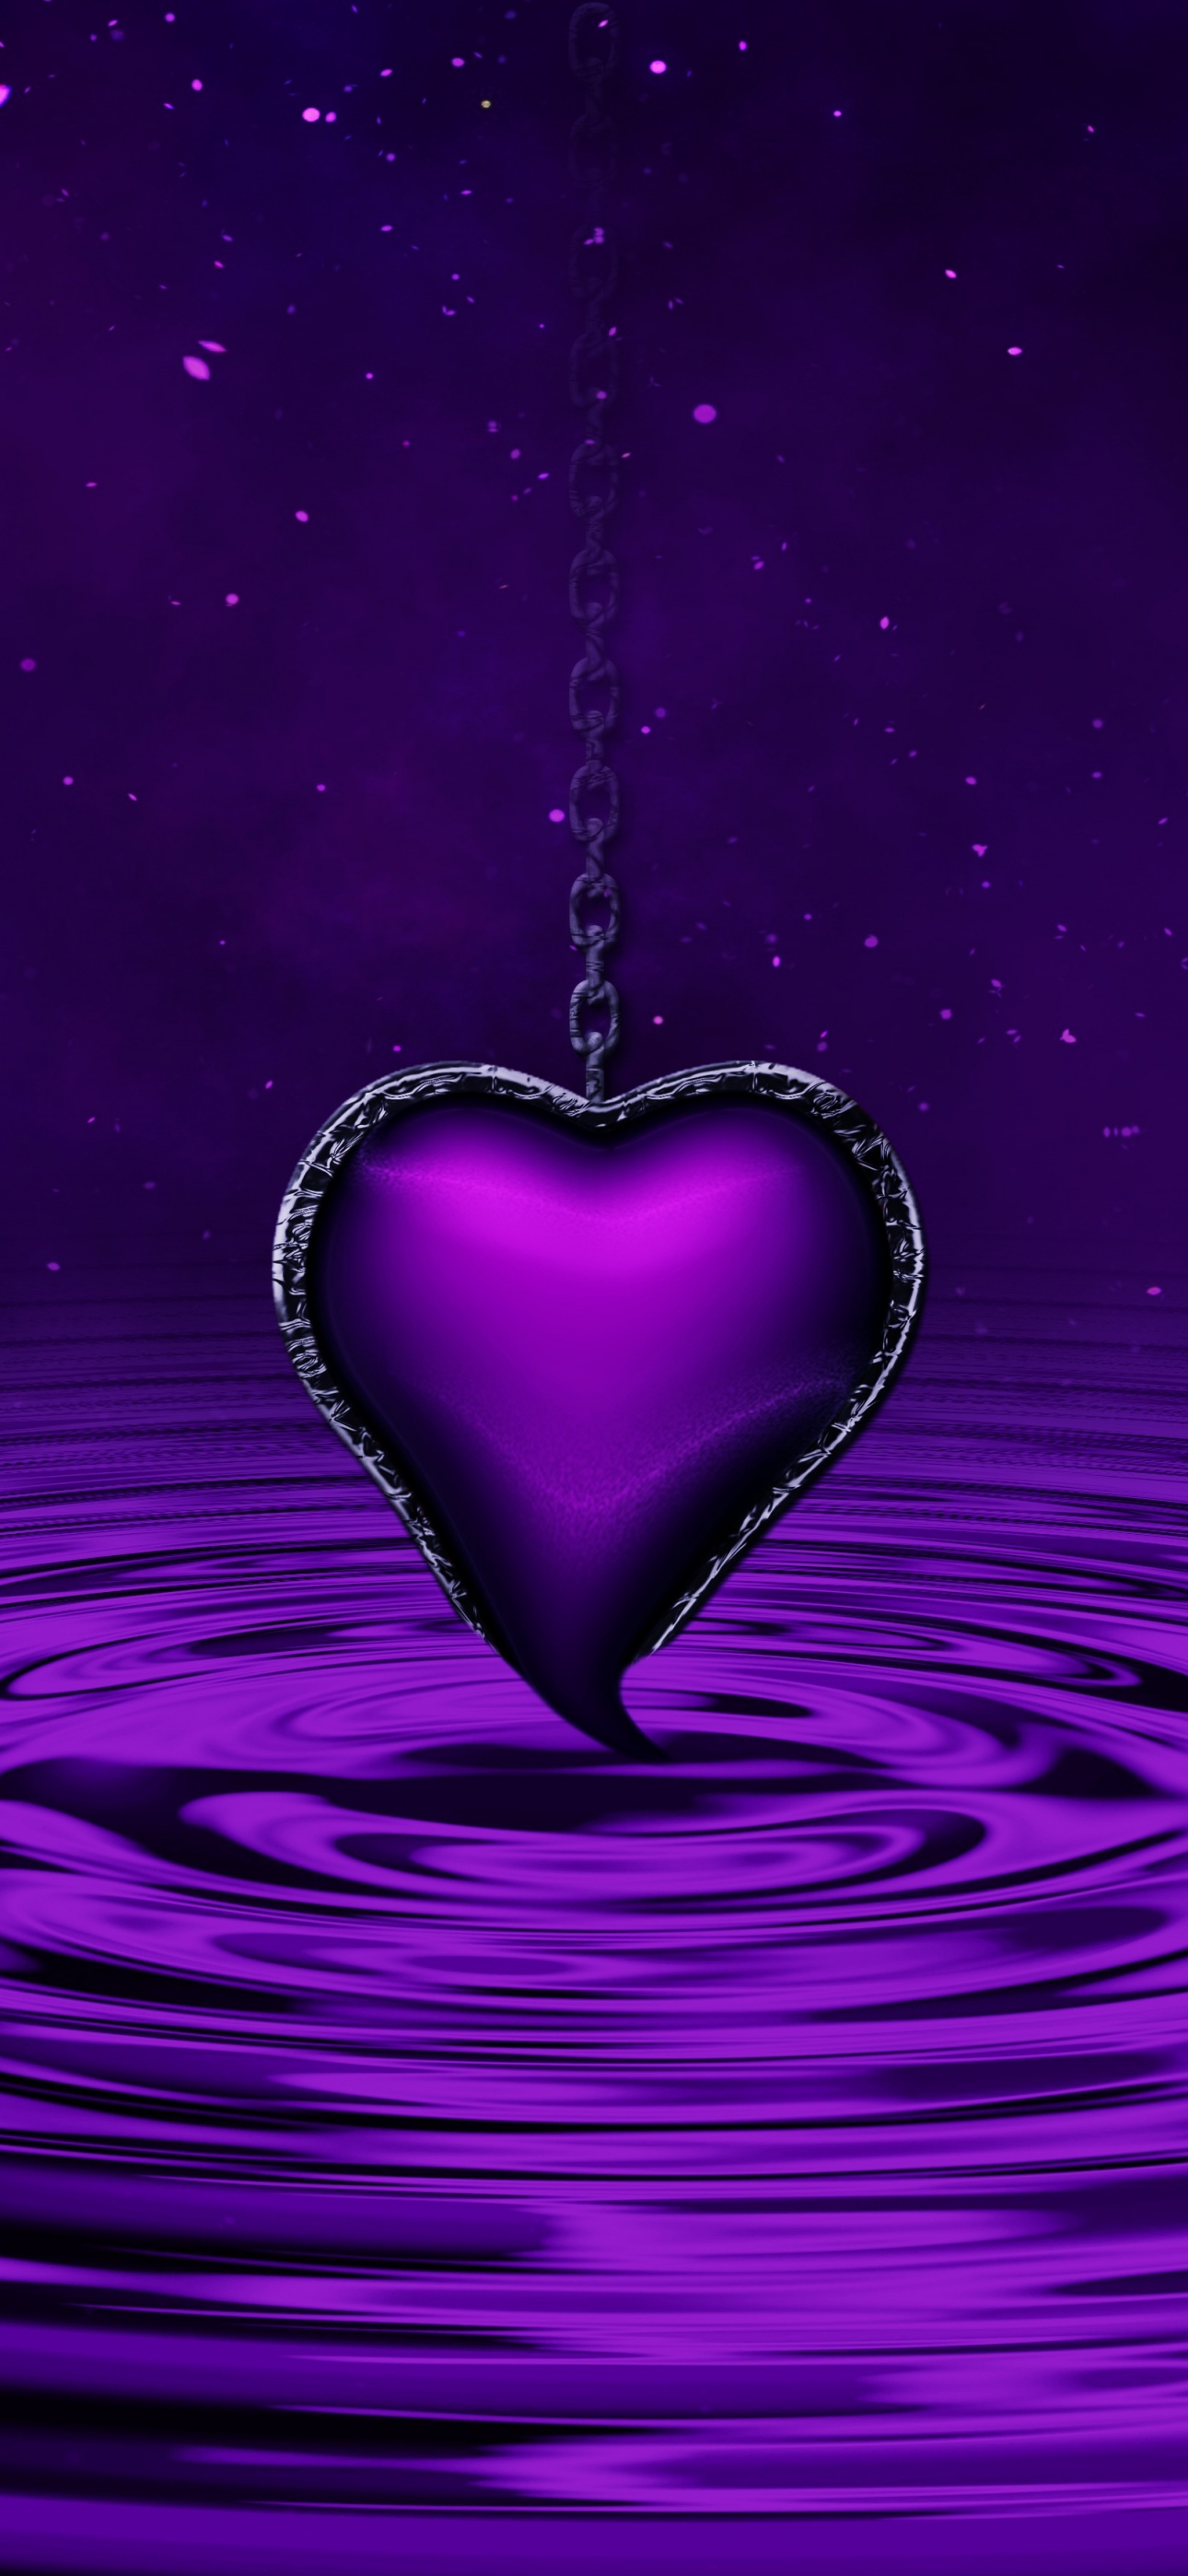 Wallpaper Heart Blue Purple Light Love Background  Download Free Image